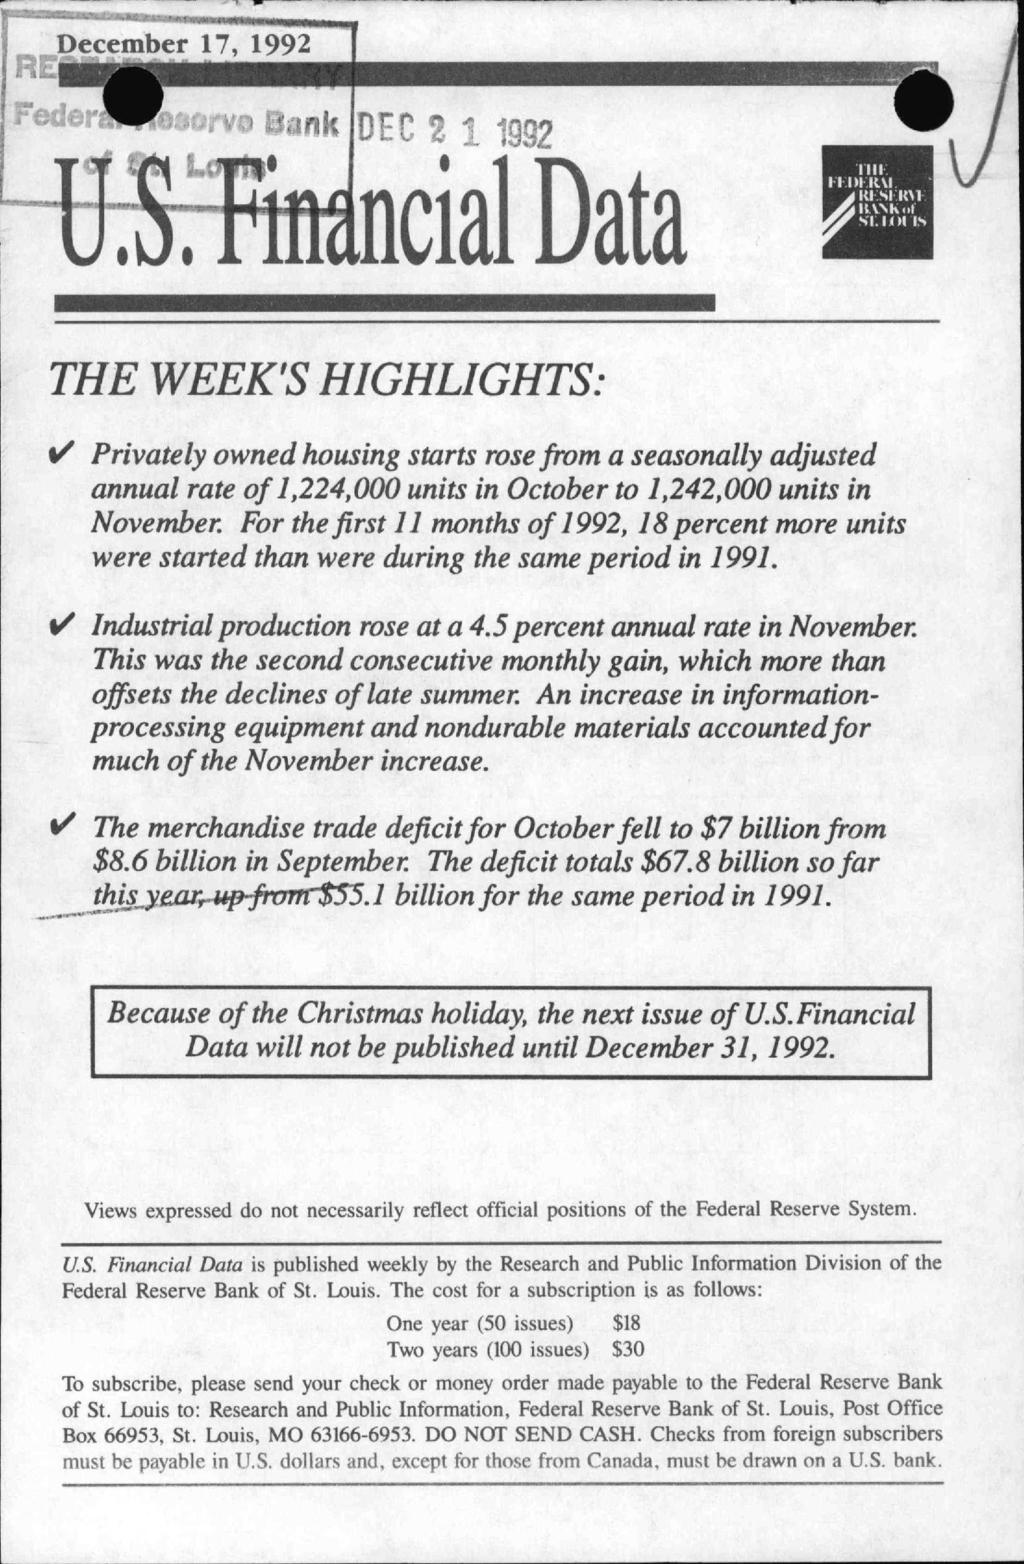 December 17, 1992 U.S.